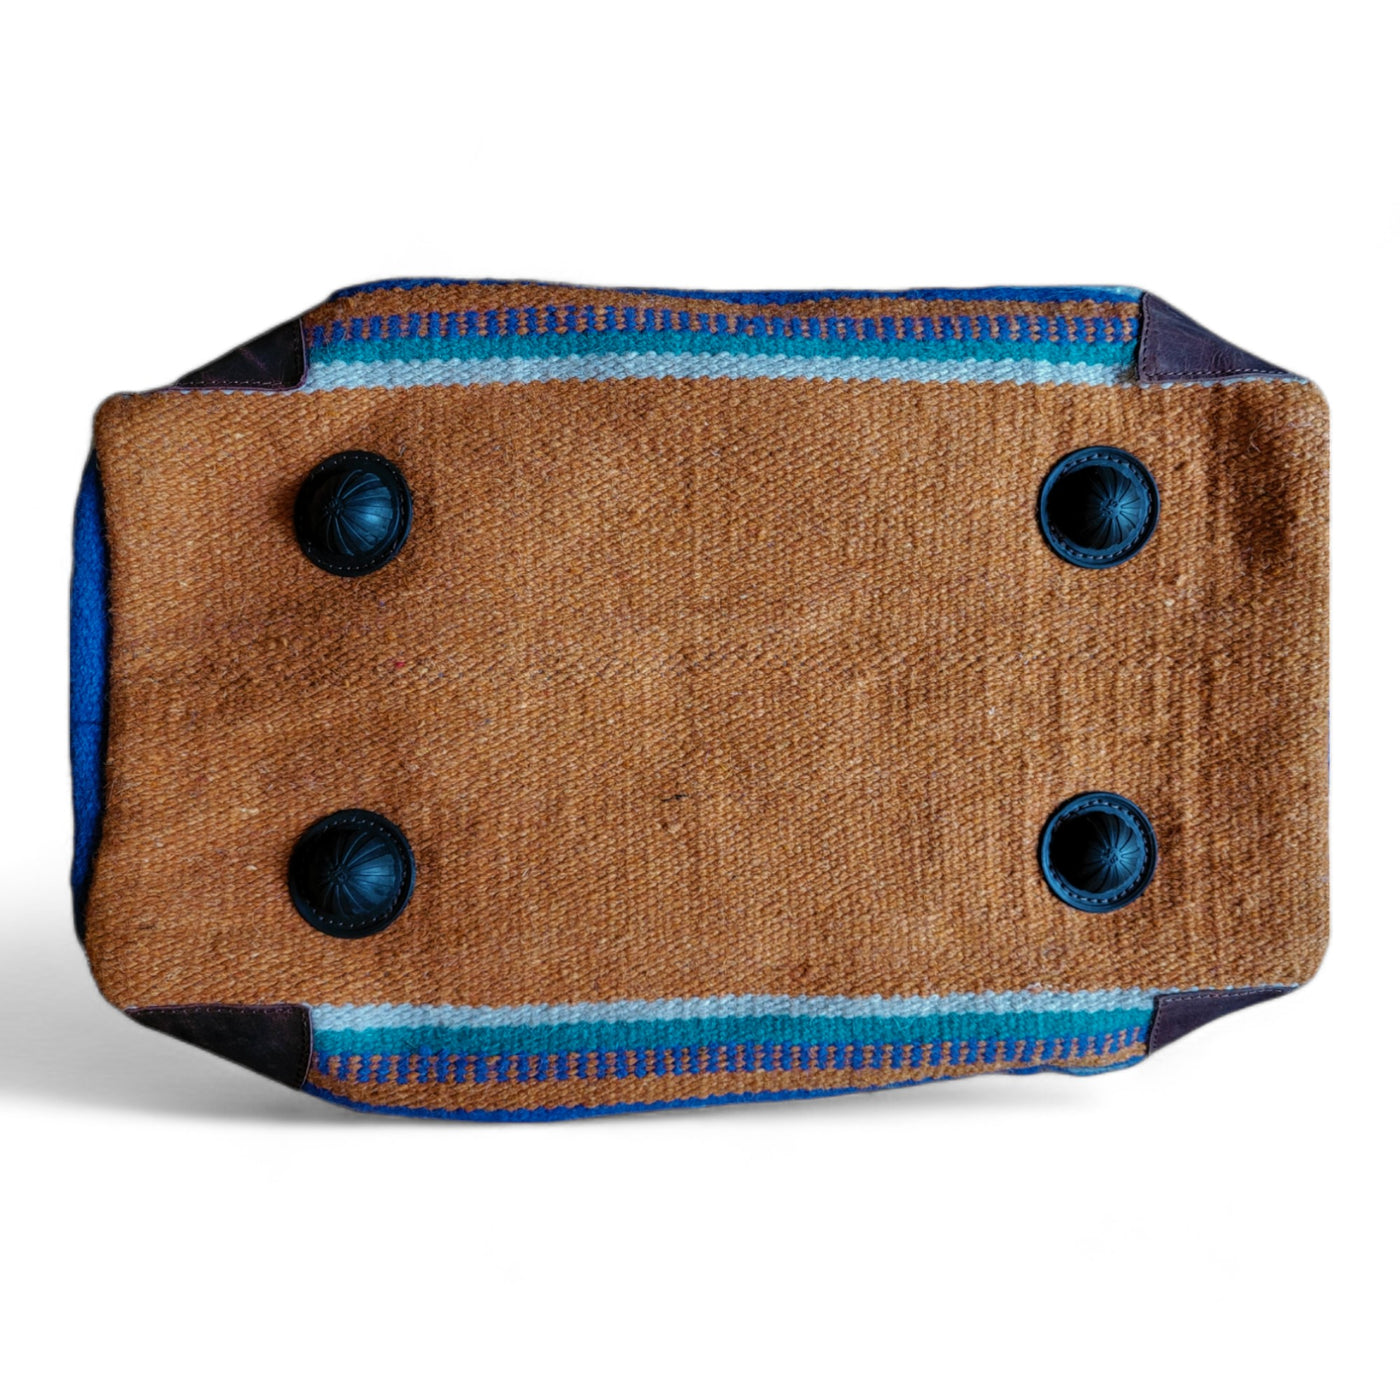 Boho Aztec Large Weekender Southwestern Duffel Bag Dakota Saddle Blanket Bag 100% Leather Handles